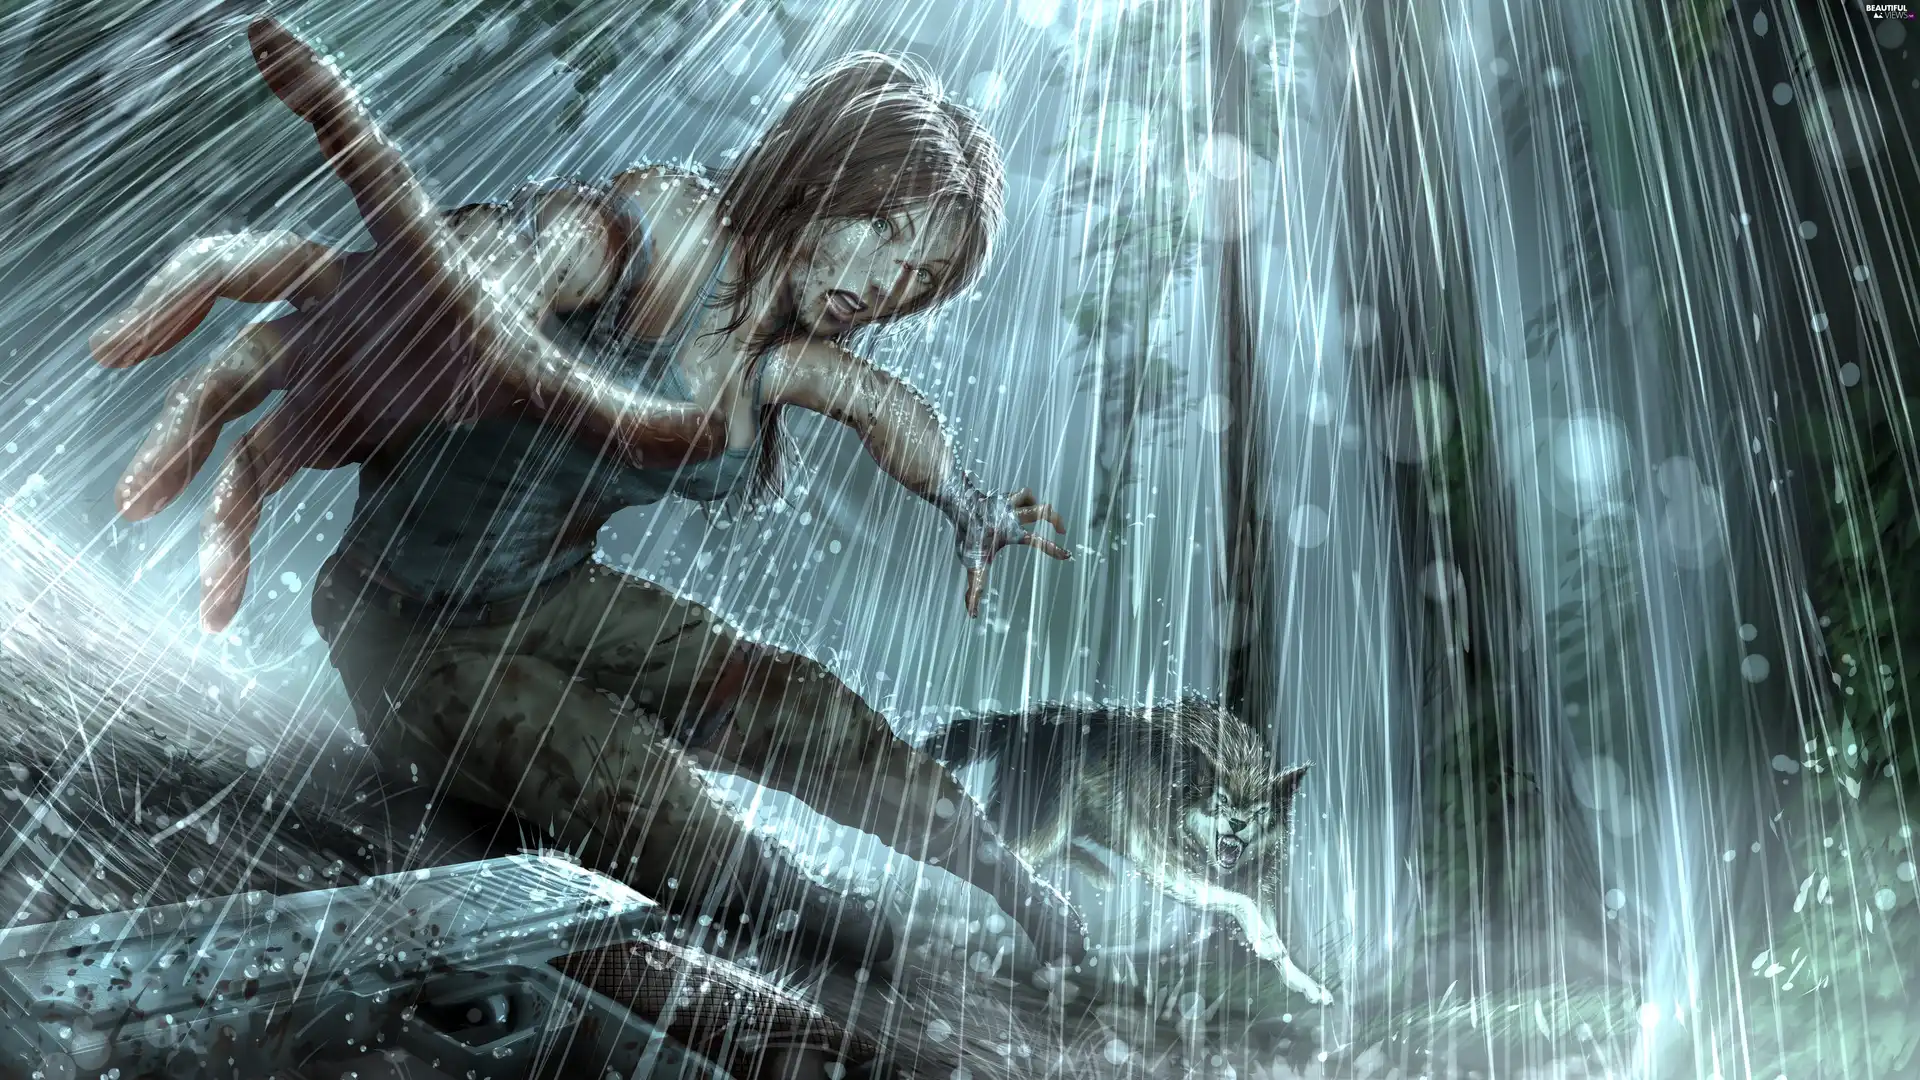 Tomb Raider, Rain, Wolf, Lara Croft